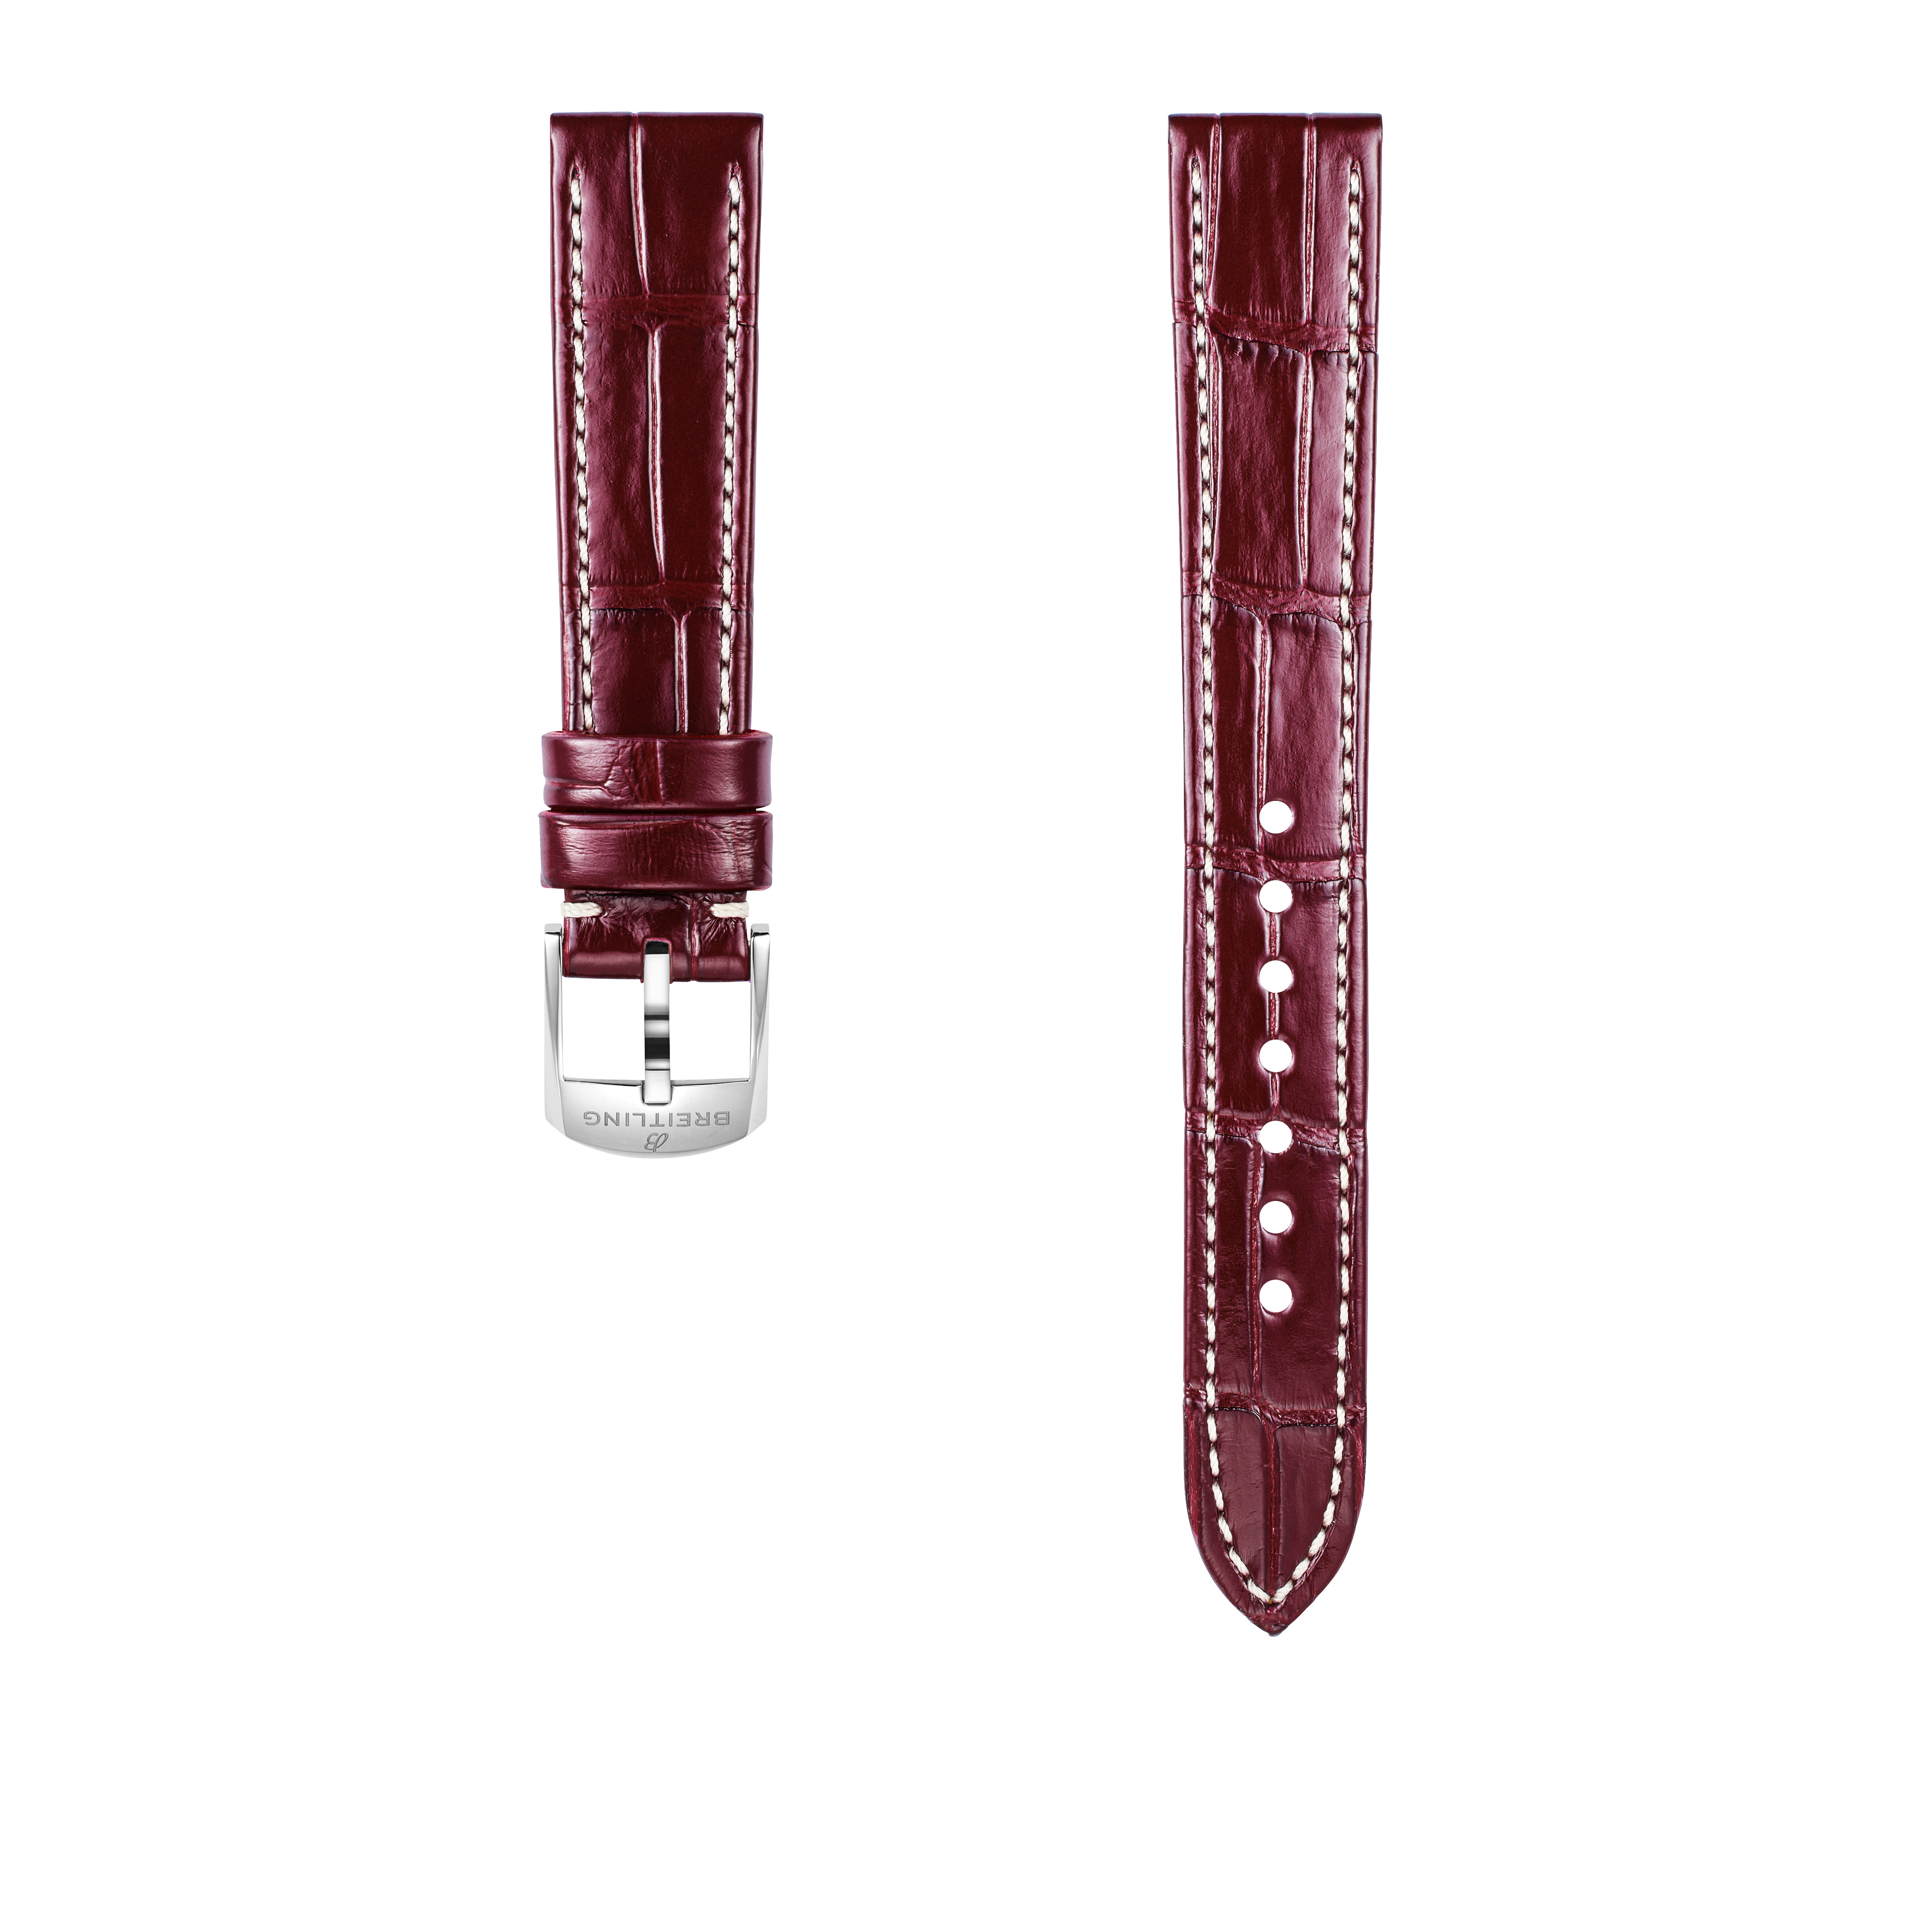 Burgundy alligator leather strap - 16 mm